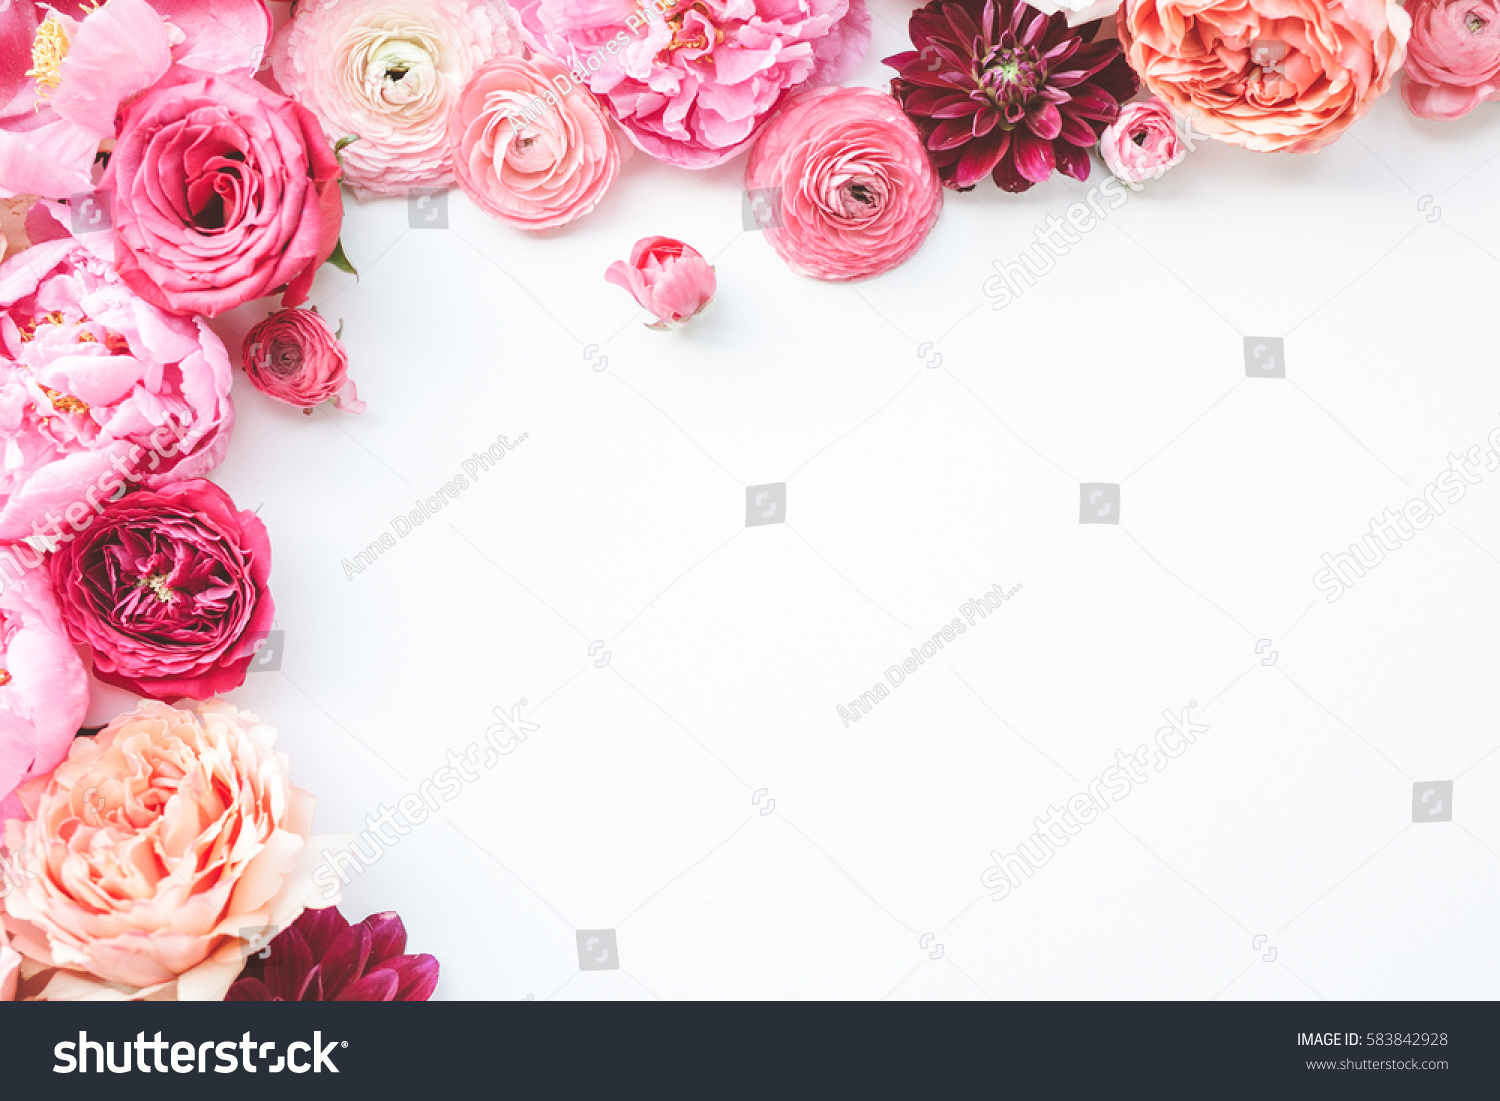 Pink floral / assorted pink flower border on white background #583842928